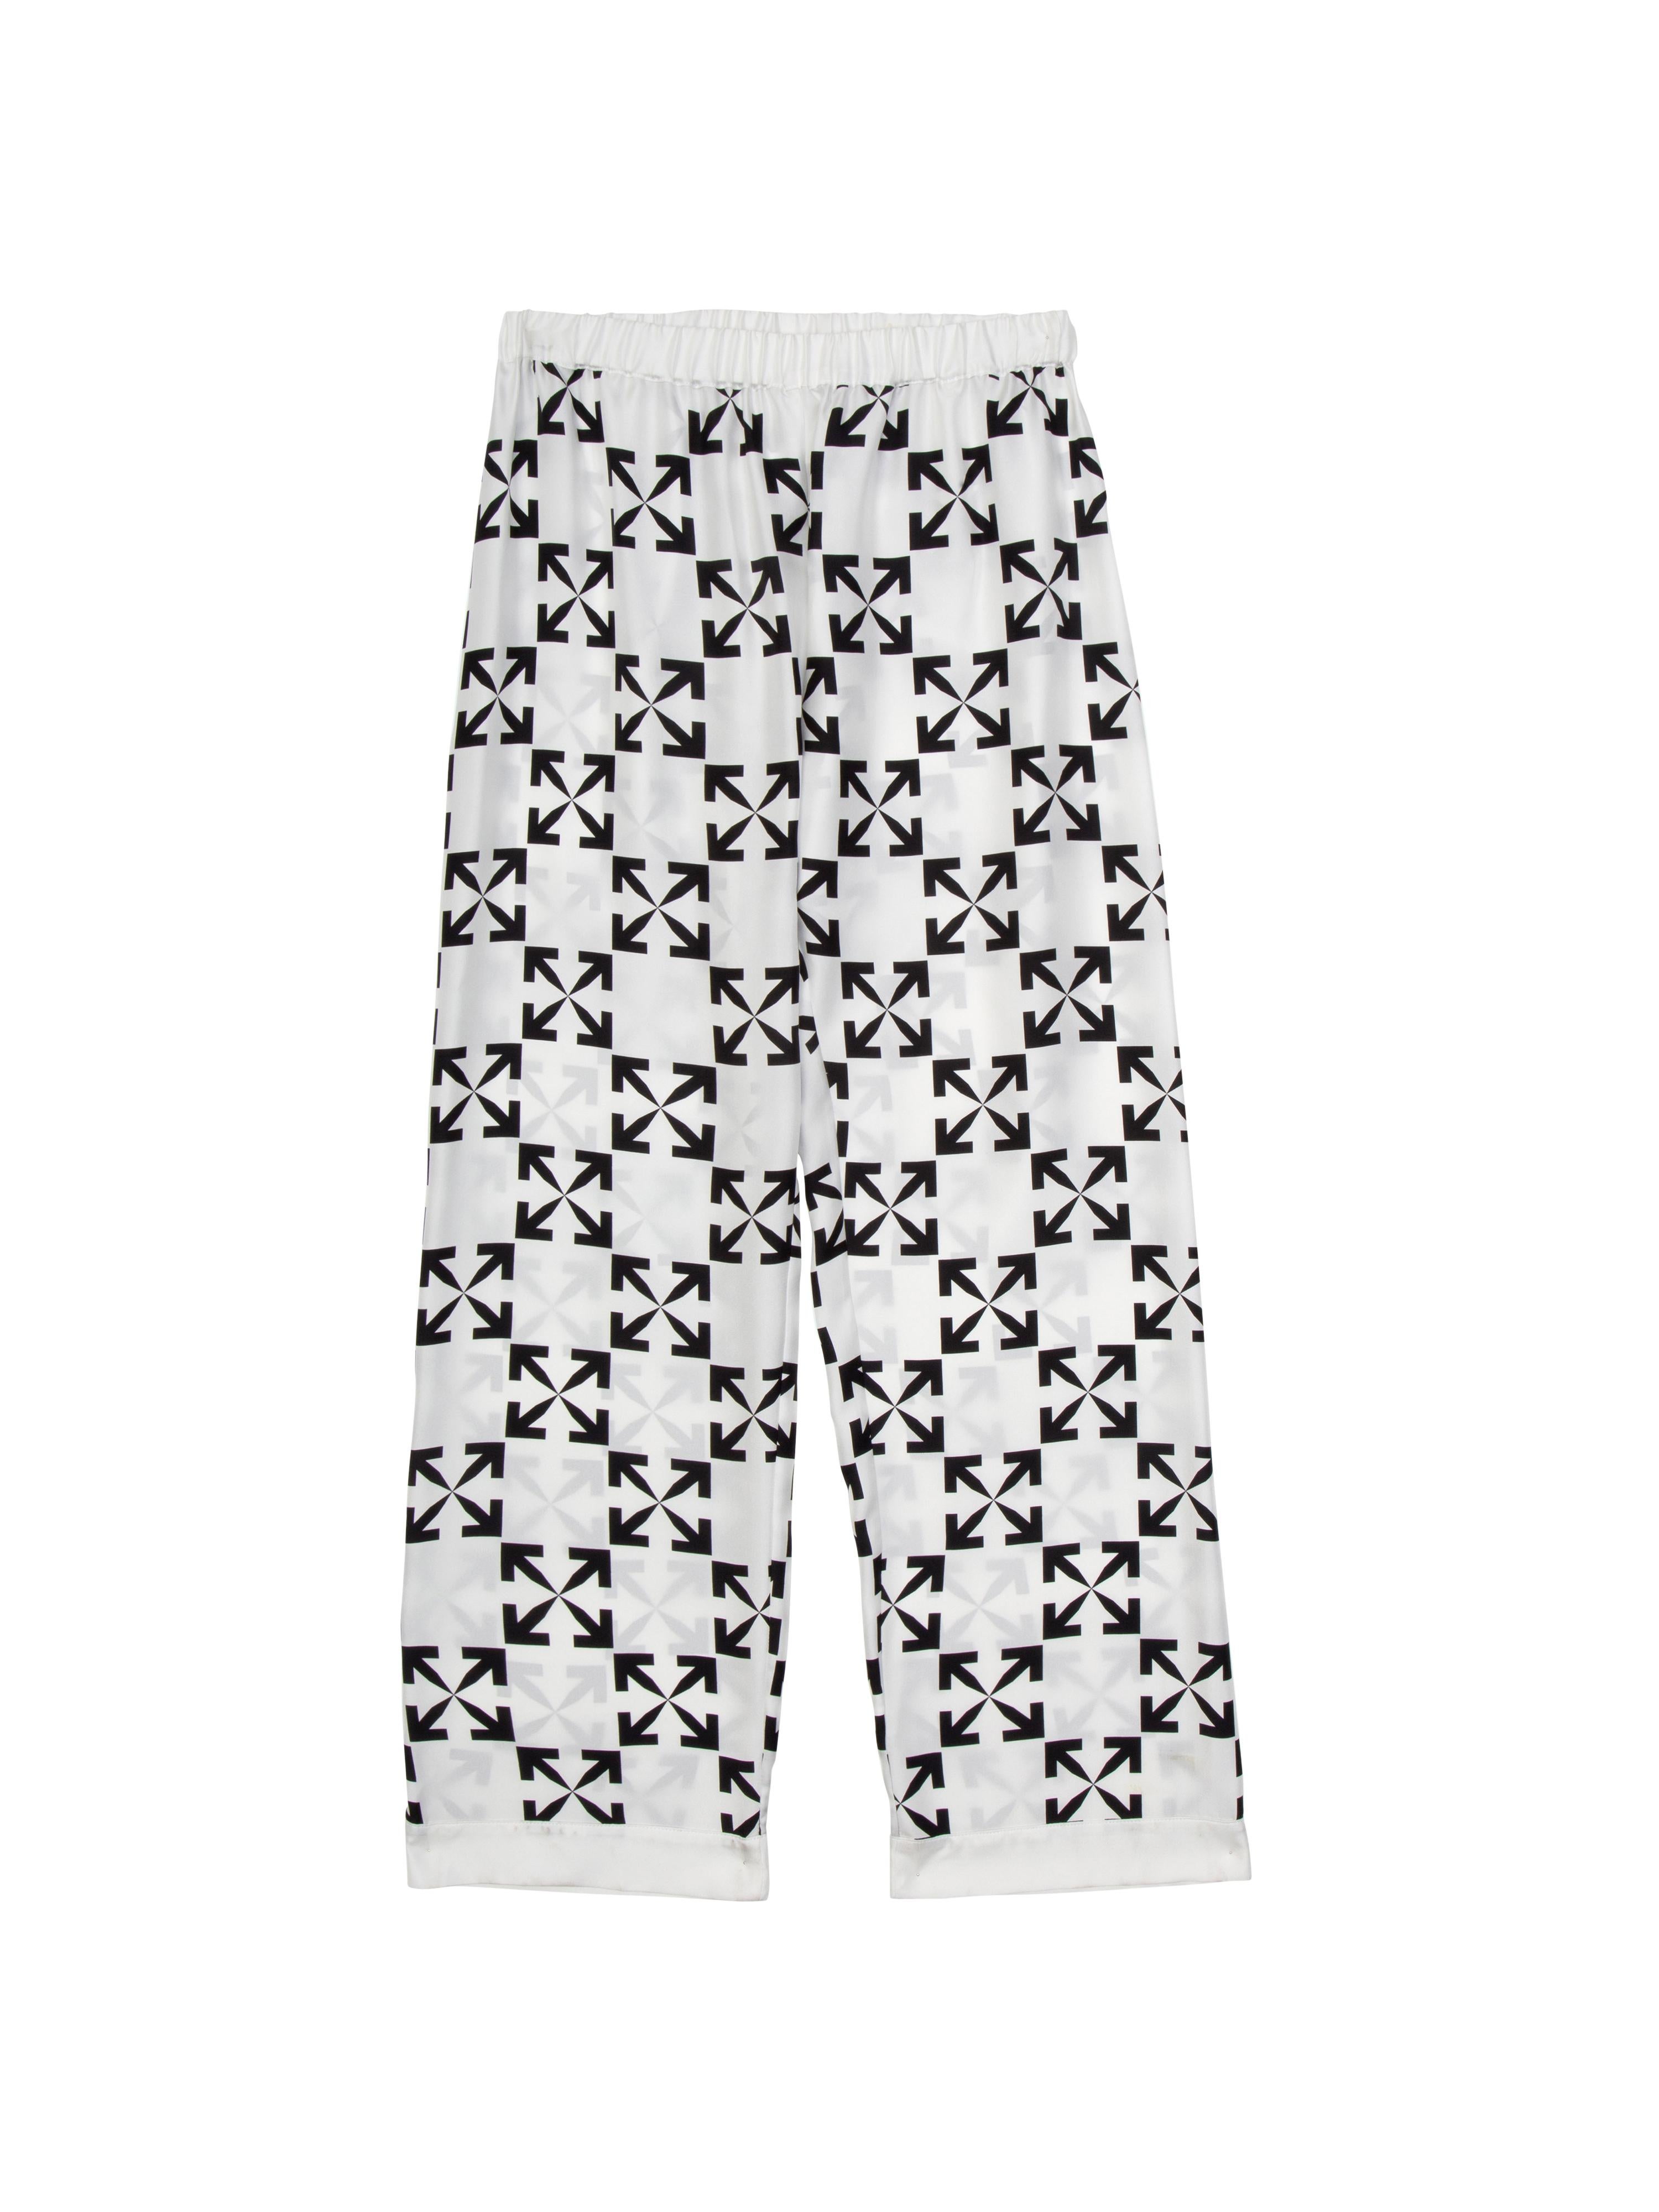 Italian Off-White Arrow Pattern Pijama White Black Medium For Sale